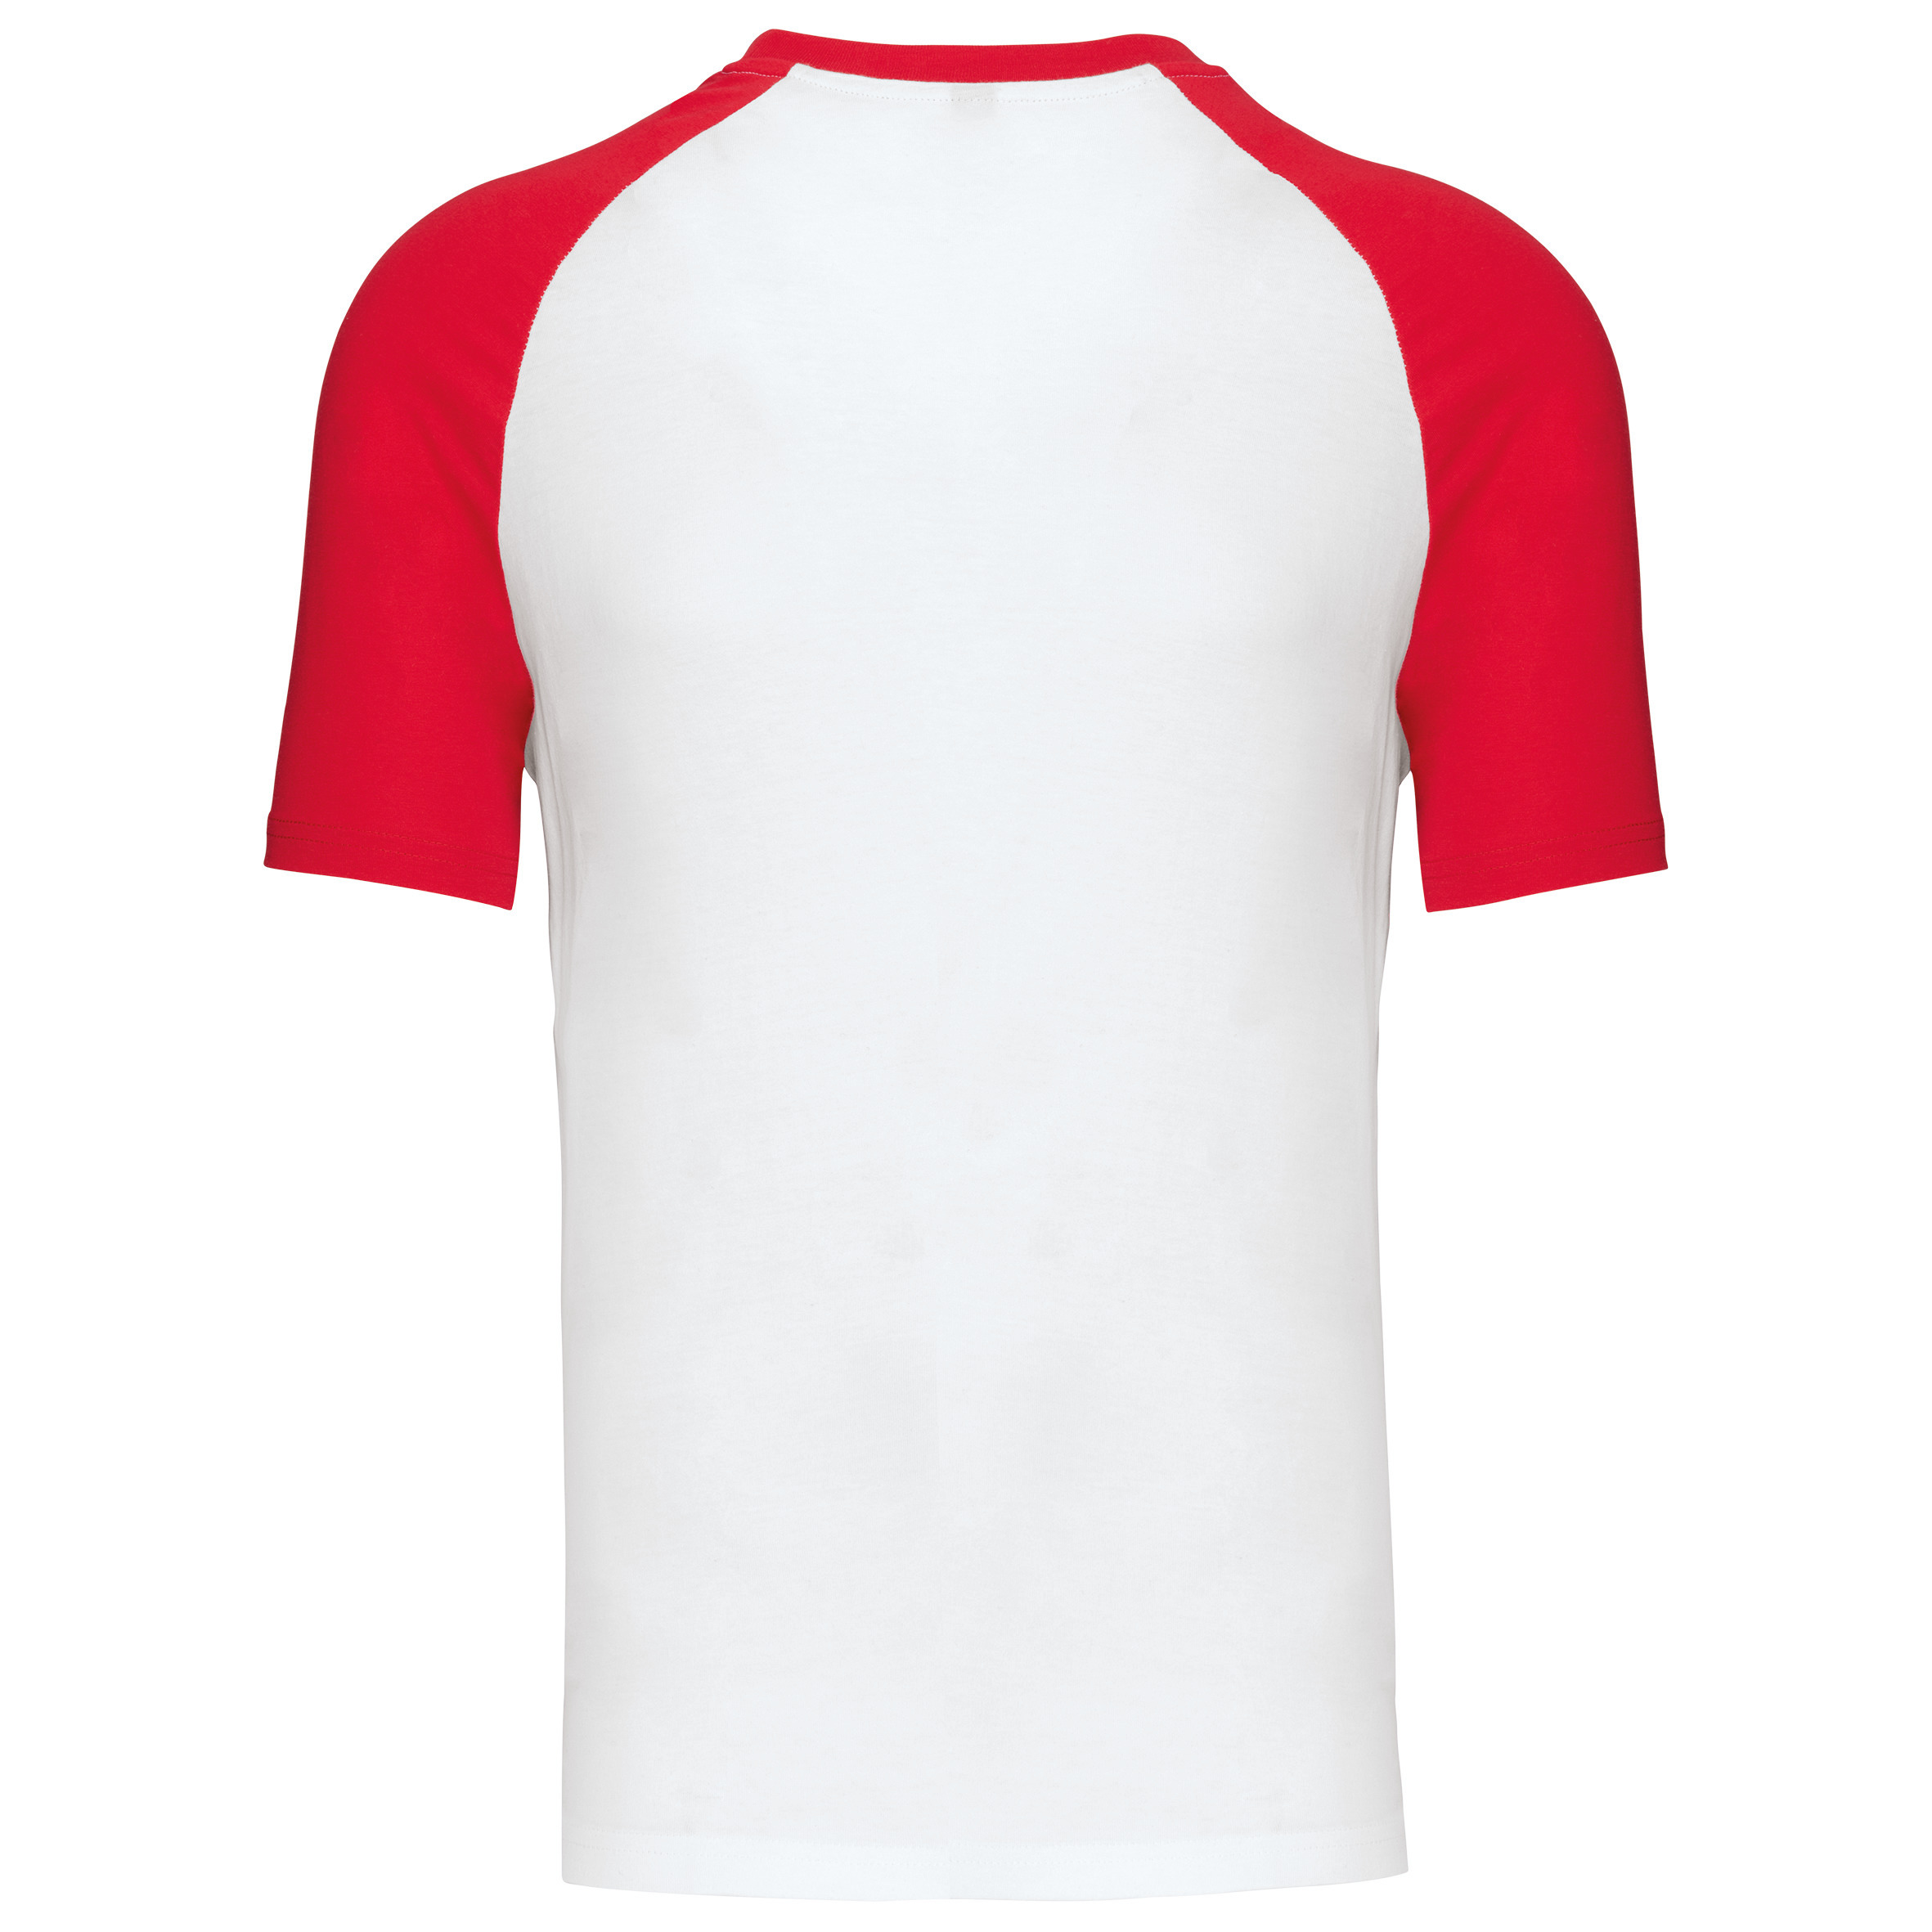 Camiseta Baseball bicolor de manga corta